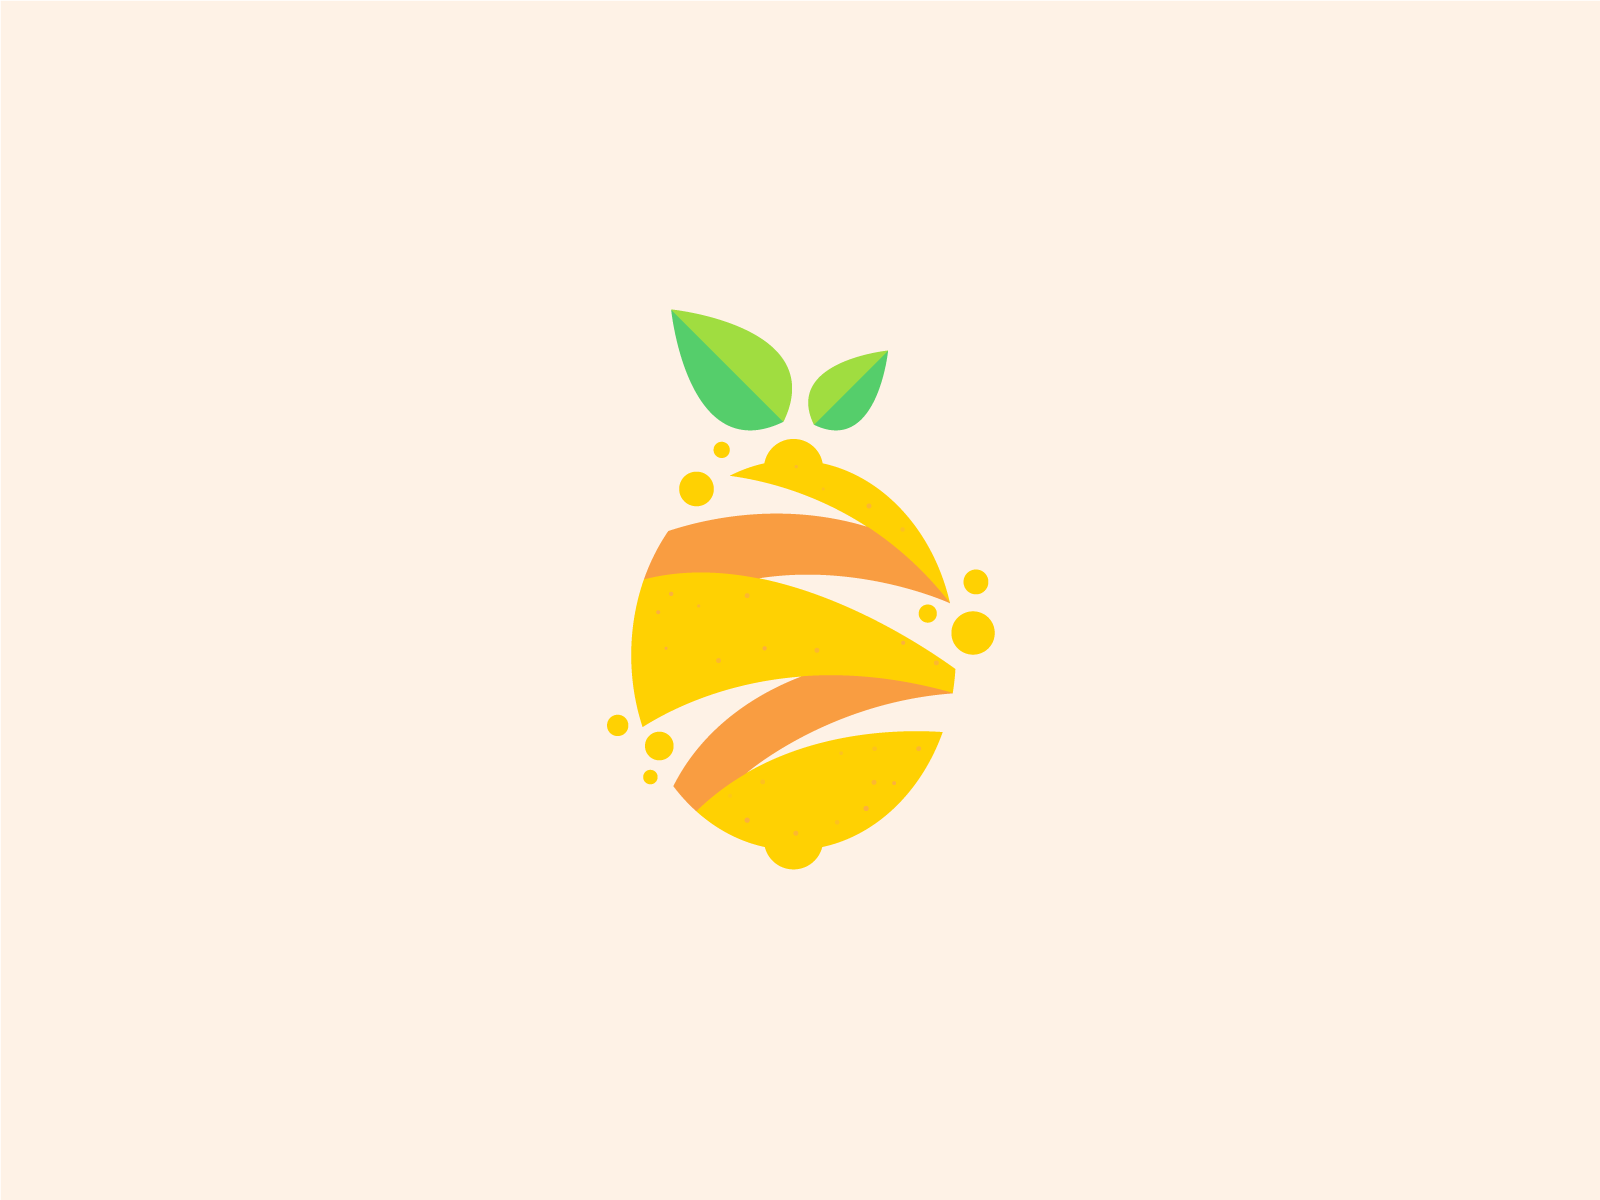 100,000 Lemon logo Vector Images | Depositphotos